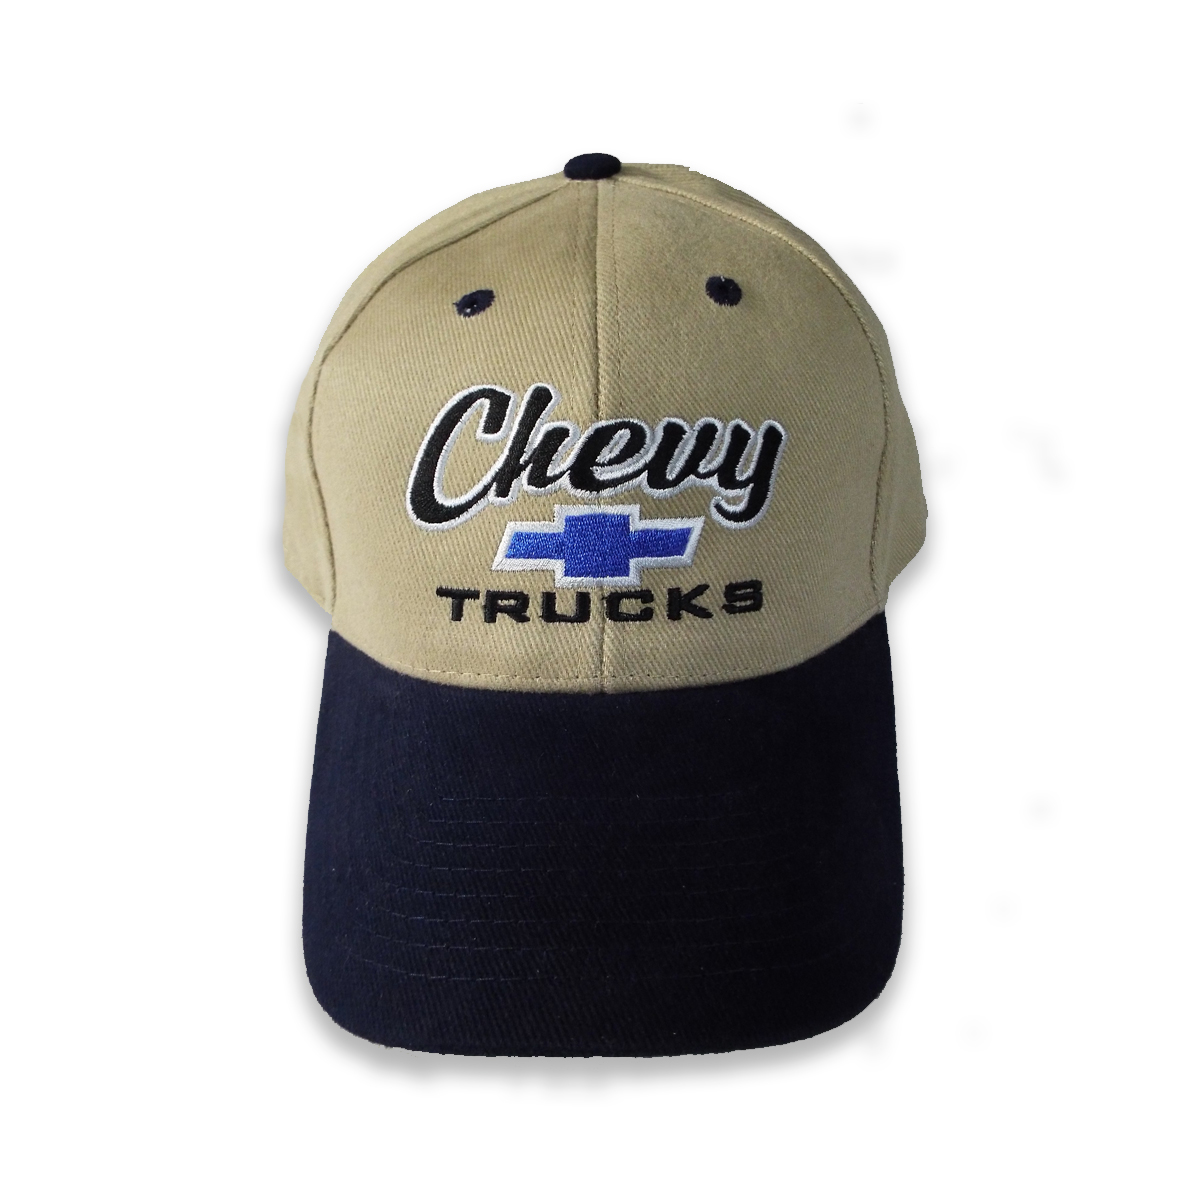 Baseball Cap Chevy Pickup Truck Khaki/Blue with Bowtie ChevroletPickup Truck